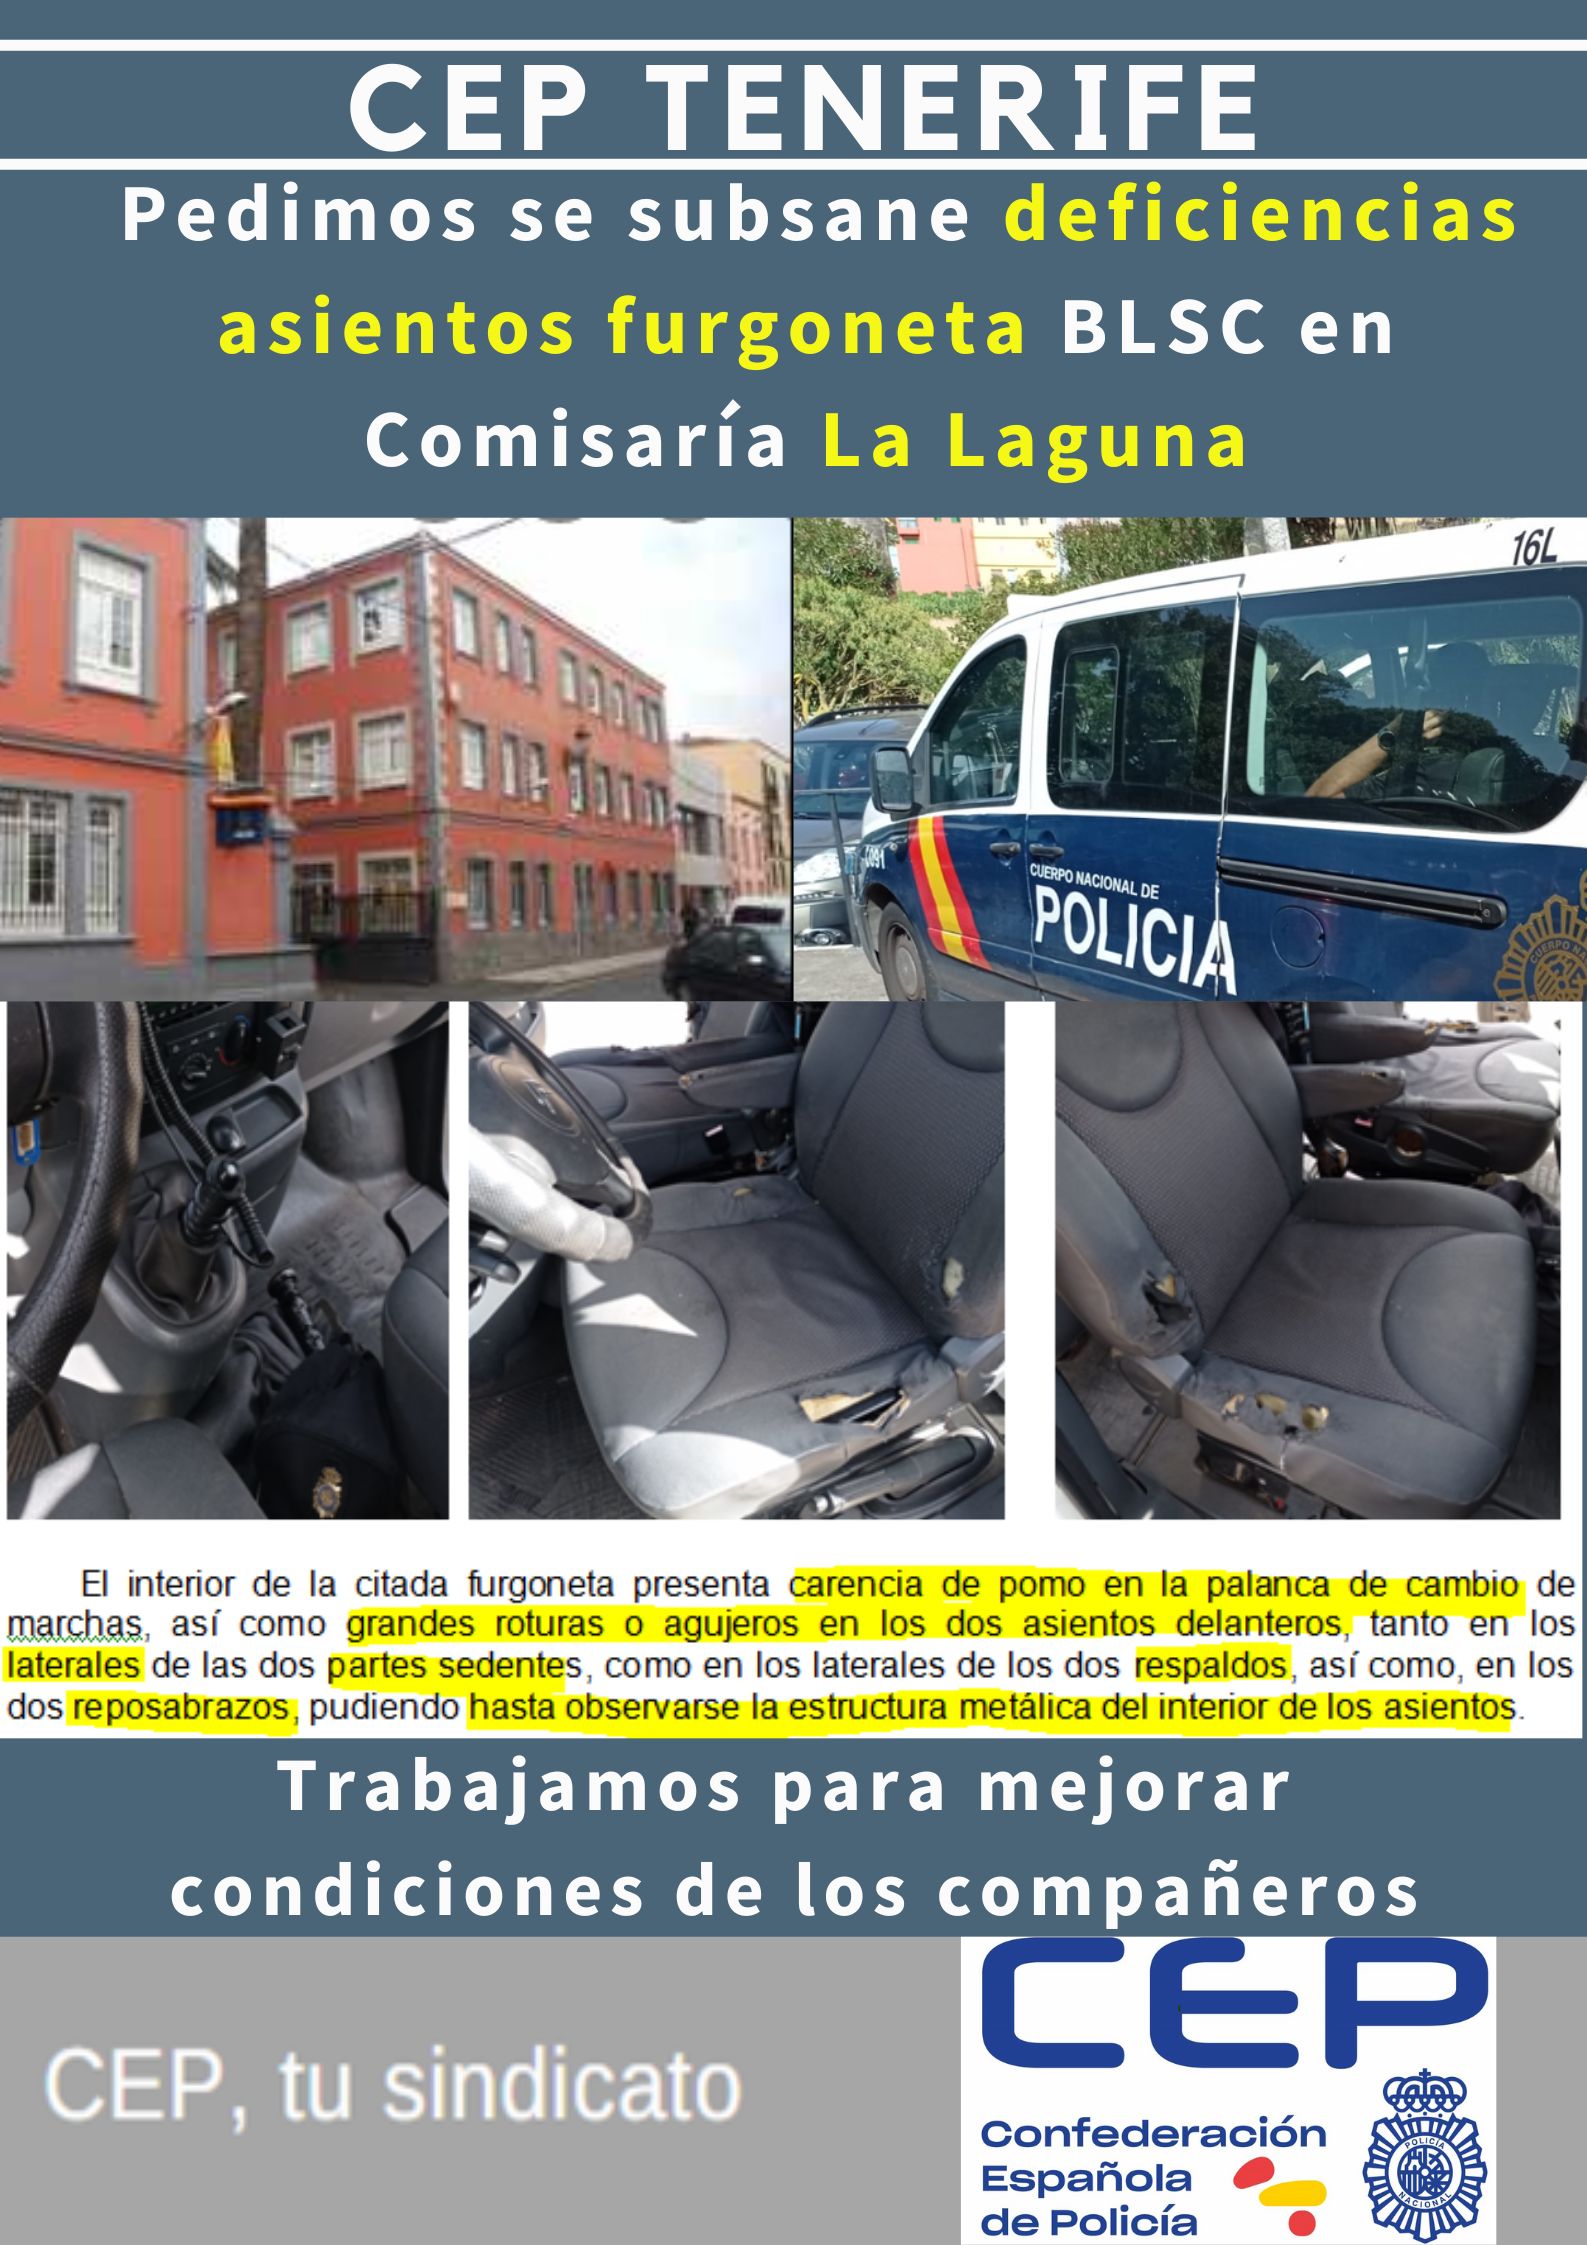 Pedimos subsanar deficiencias asientos (rotura o agujeros) furgoneta BLSC La Laguna